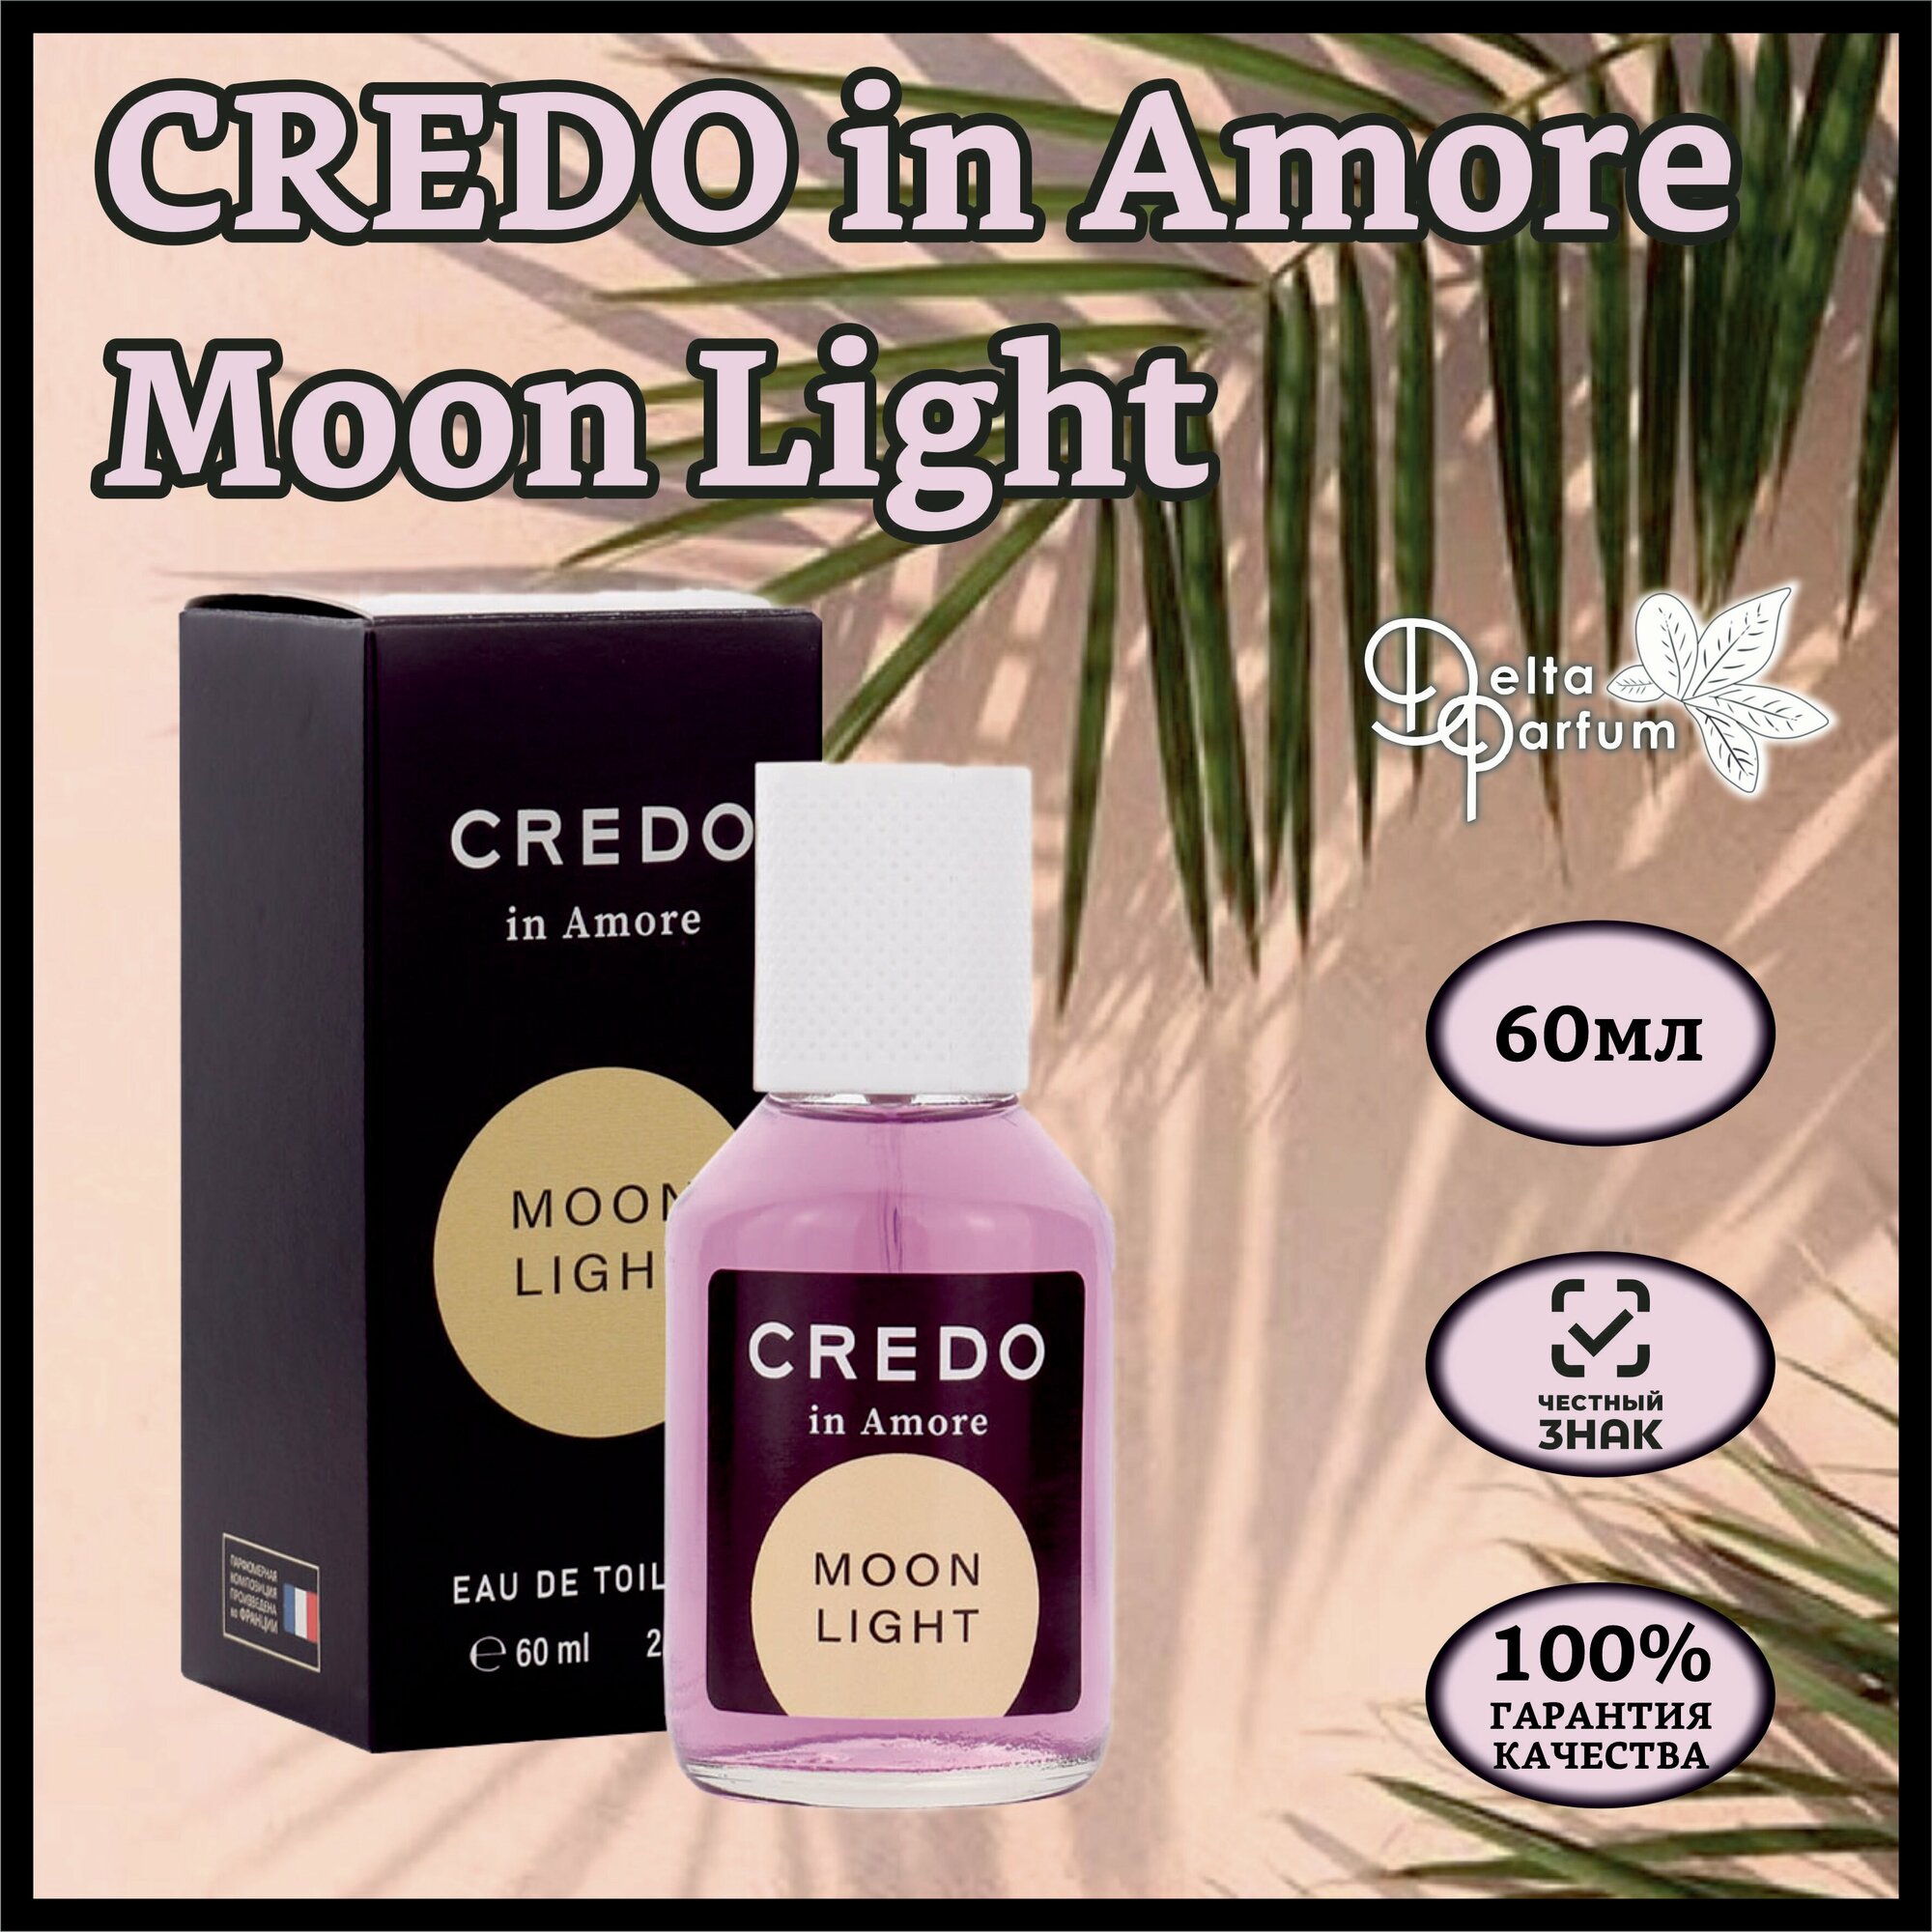 Delta parfum Туалетная вода женская Credo In Amore Moon Light, 60 мл